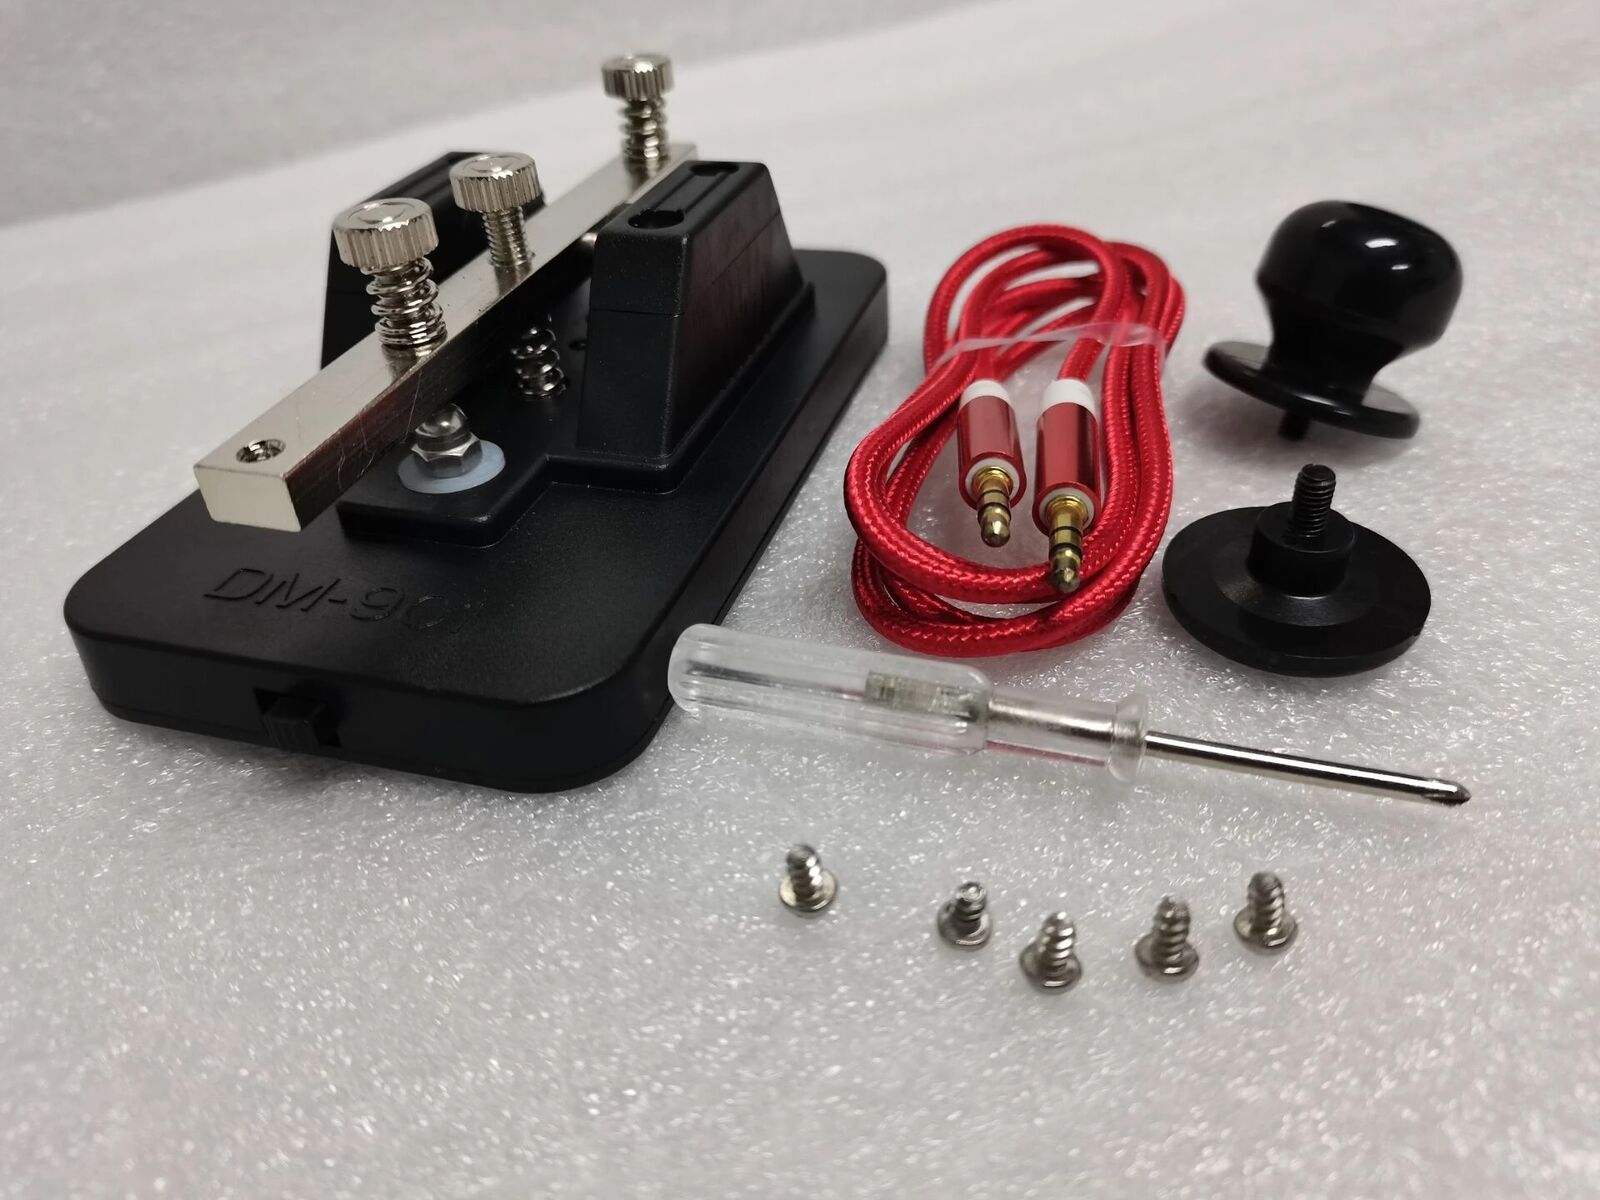 DM901 Sounding Key Automatic Key Trainer Morse Code Shortwave Radio CW